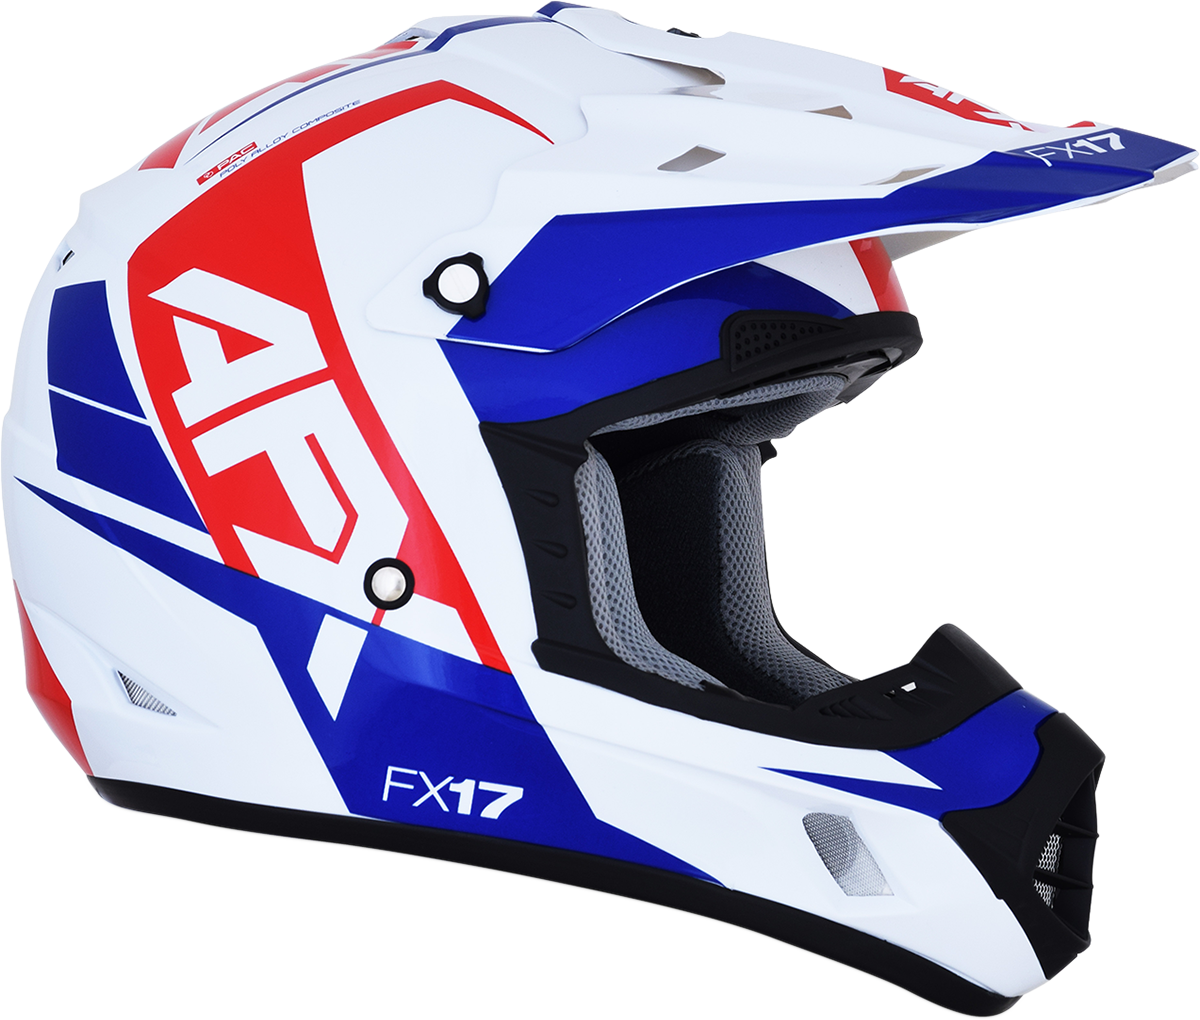 AFX FX-17 Helmet - Aced - Red/White/Blue - Large 0110-6481